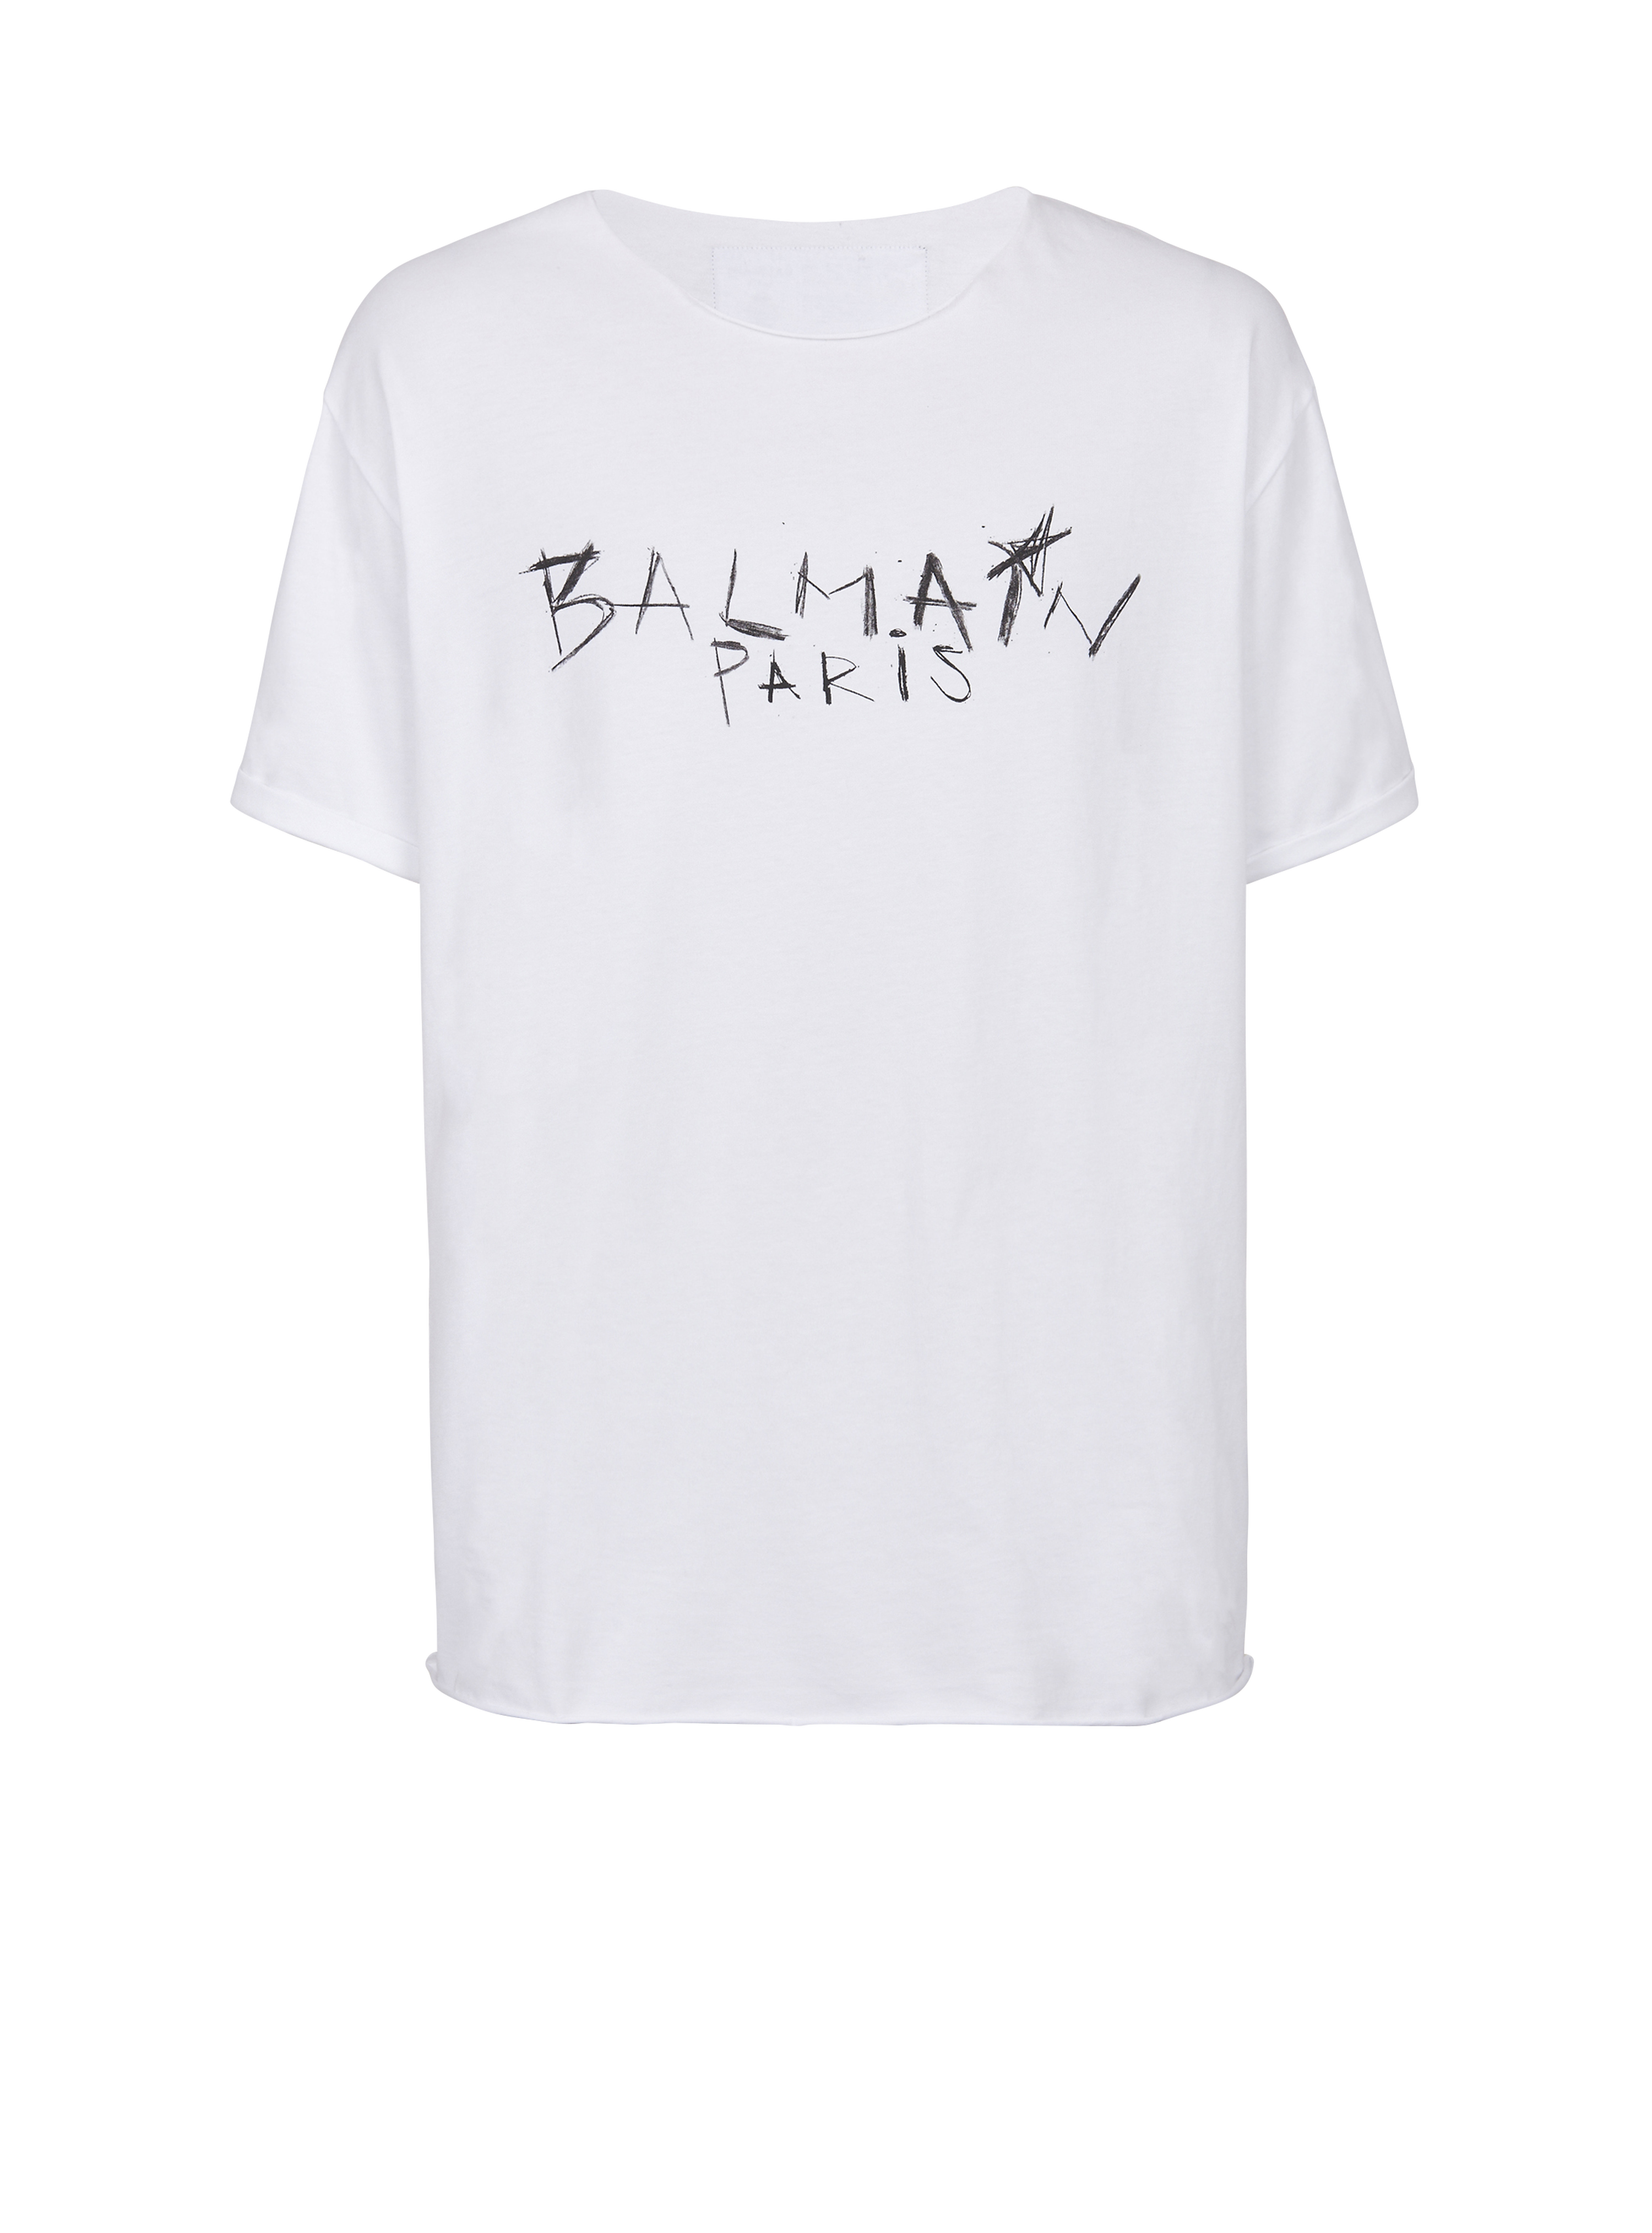 Cotton T-shirt with Balmain Paris graffiti logo print, white